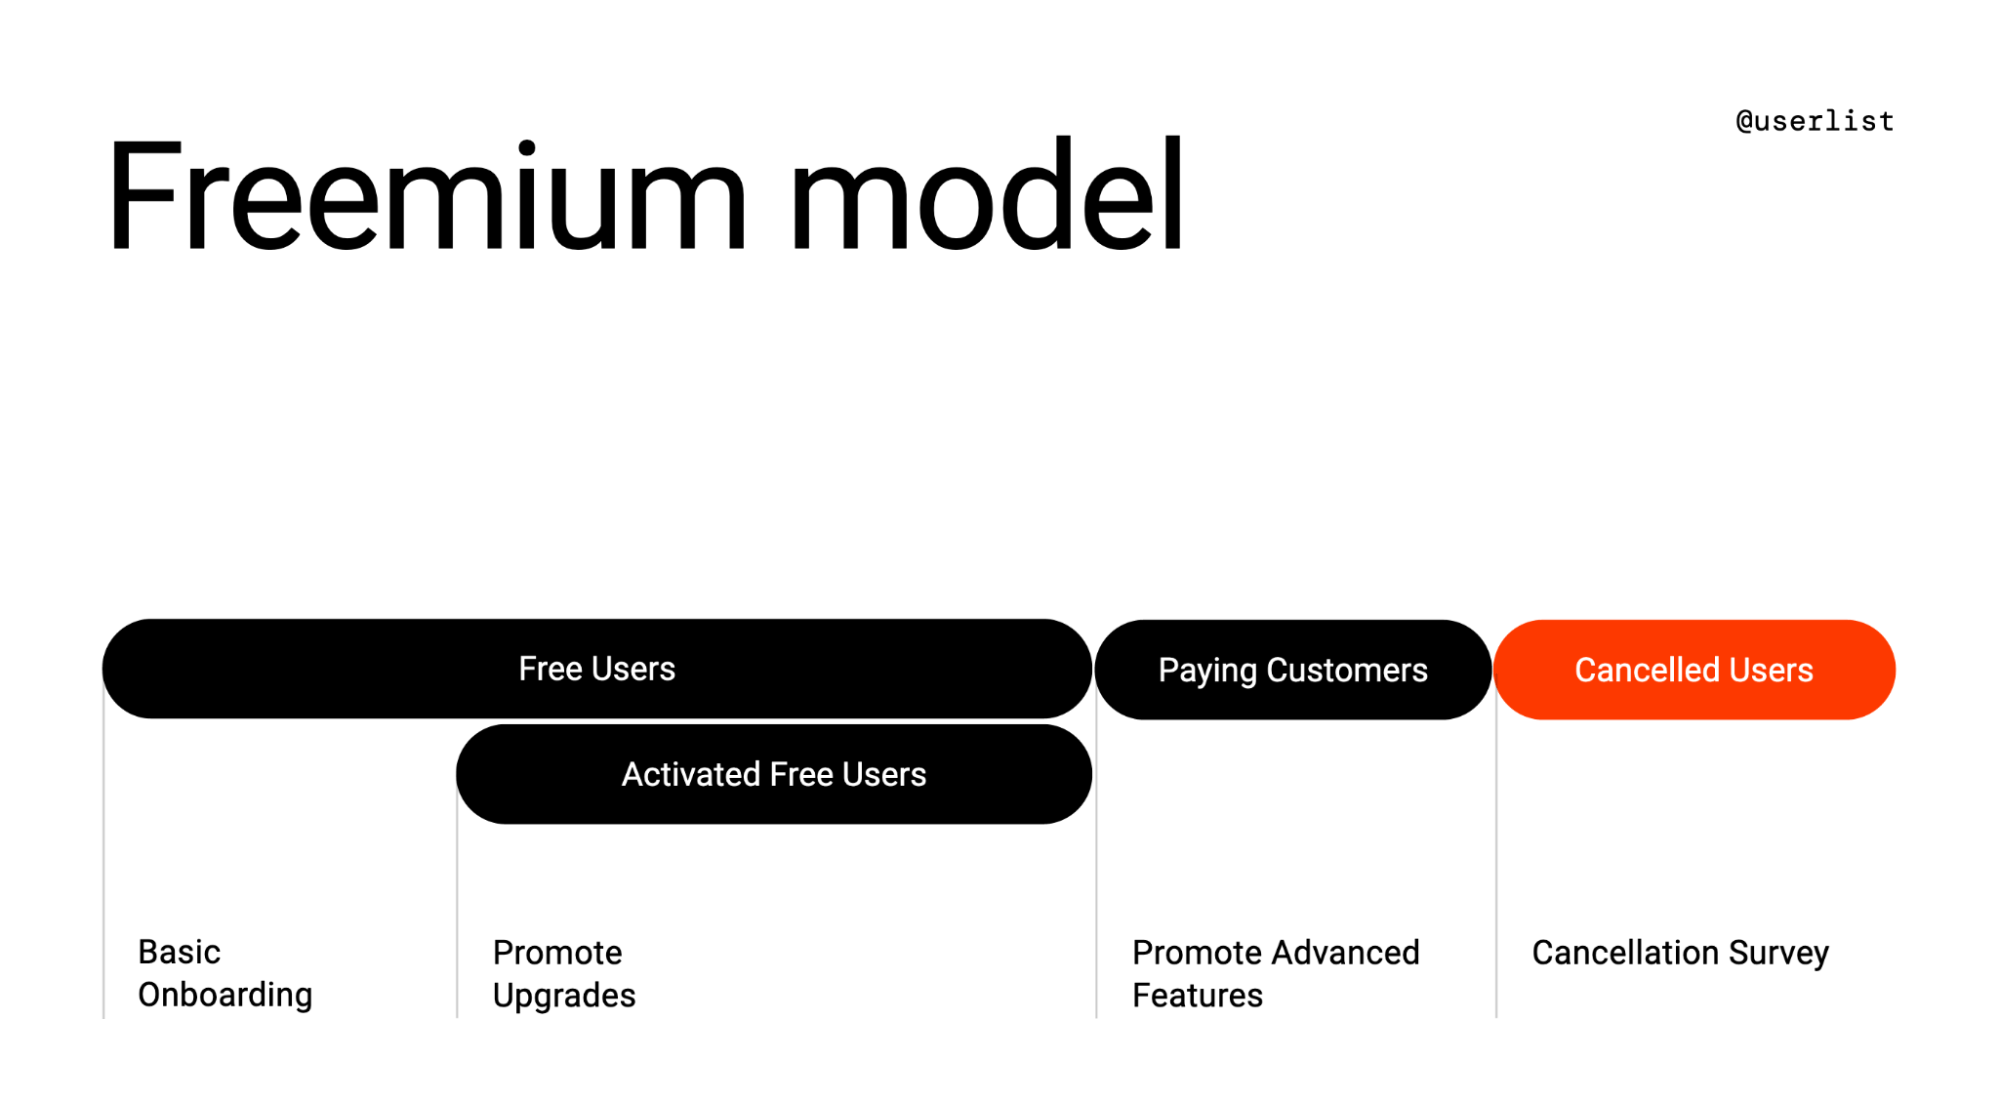 SaaS Customer Segmentation Guide: A map showing the freemium model